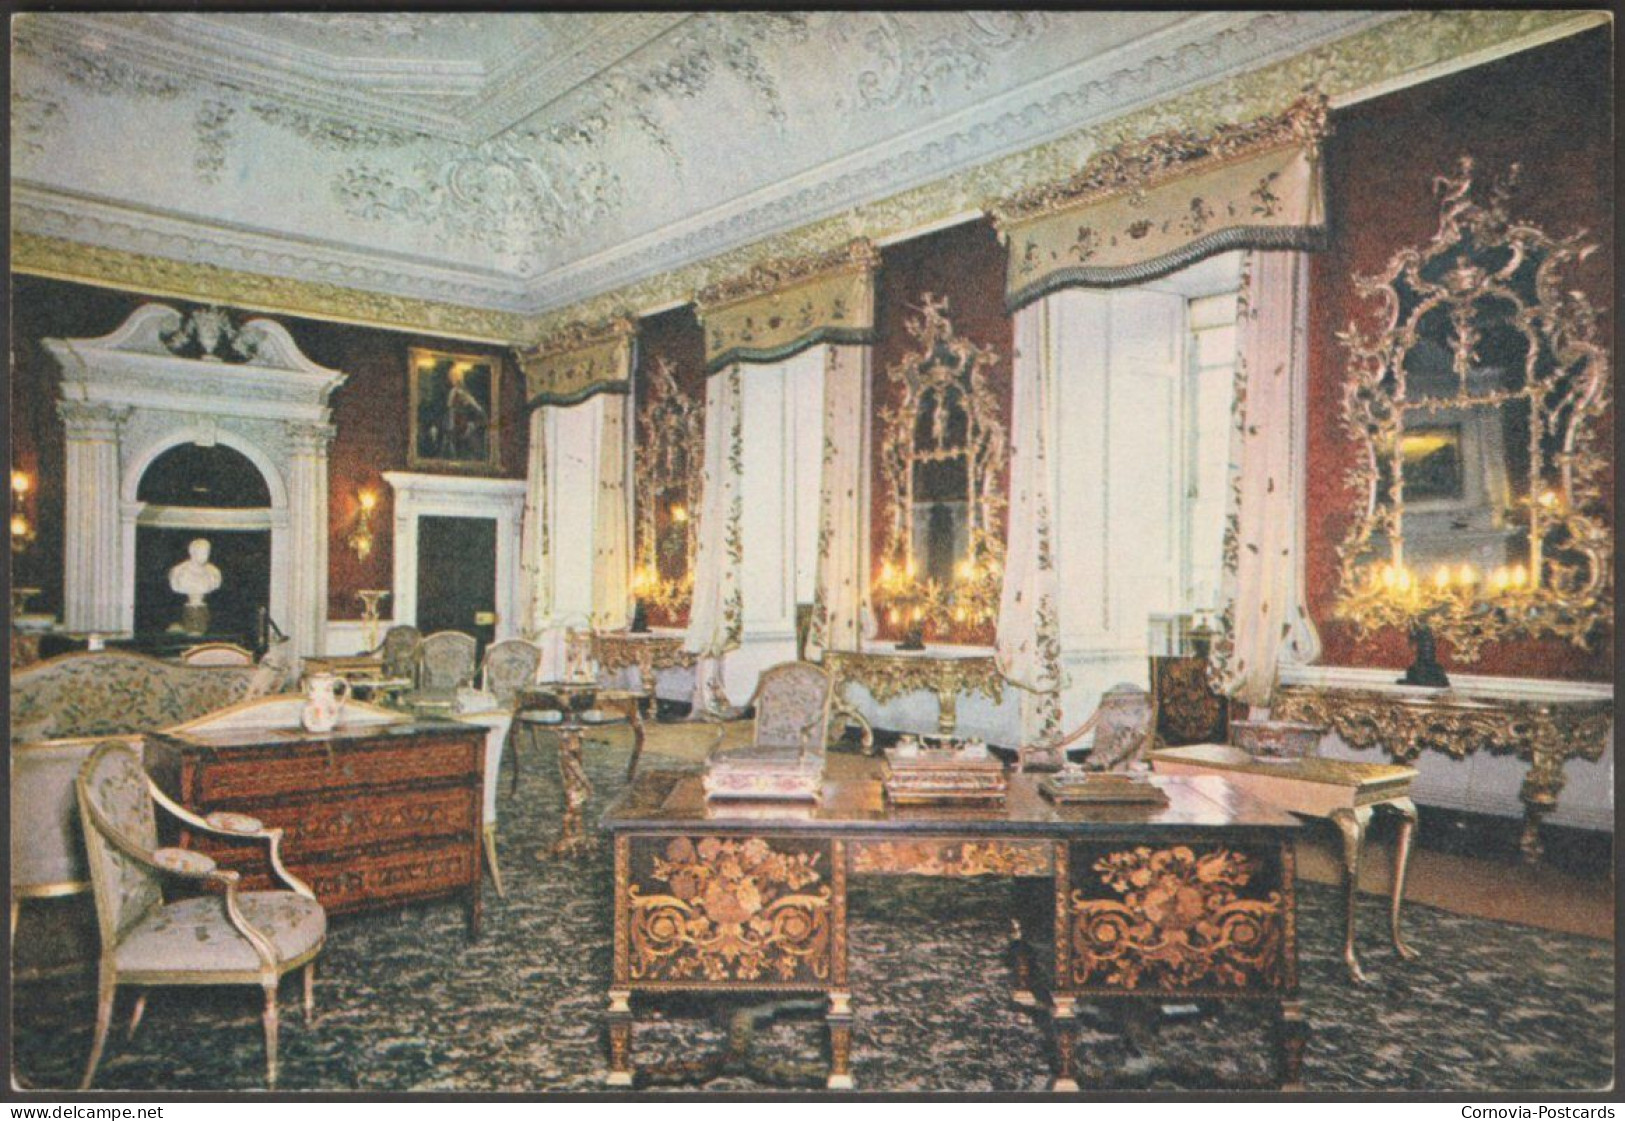 The Large Drawing Room, Blair Castle, Perthshire, C.1960s - J Arthur Dixon Postcard - Perthshire